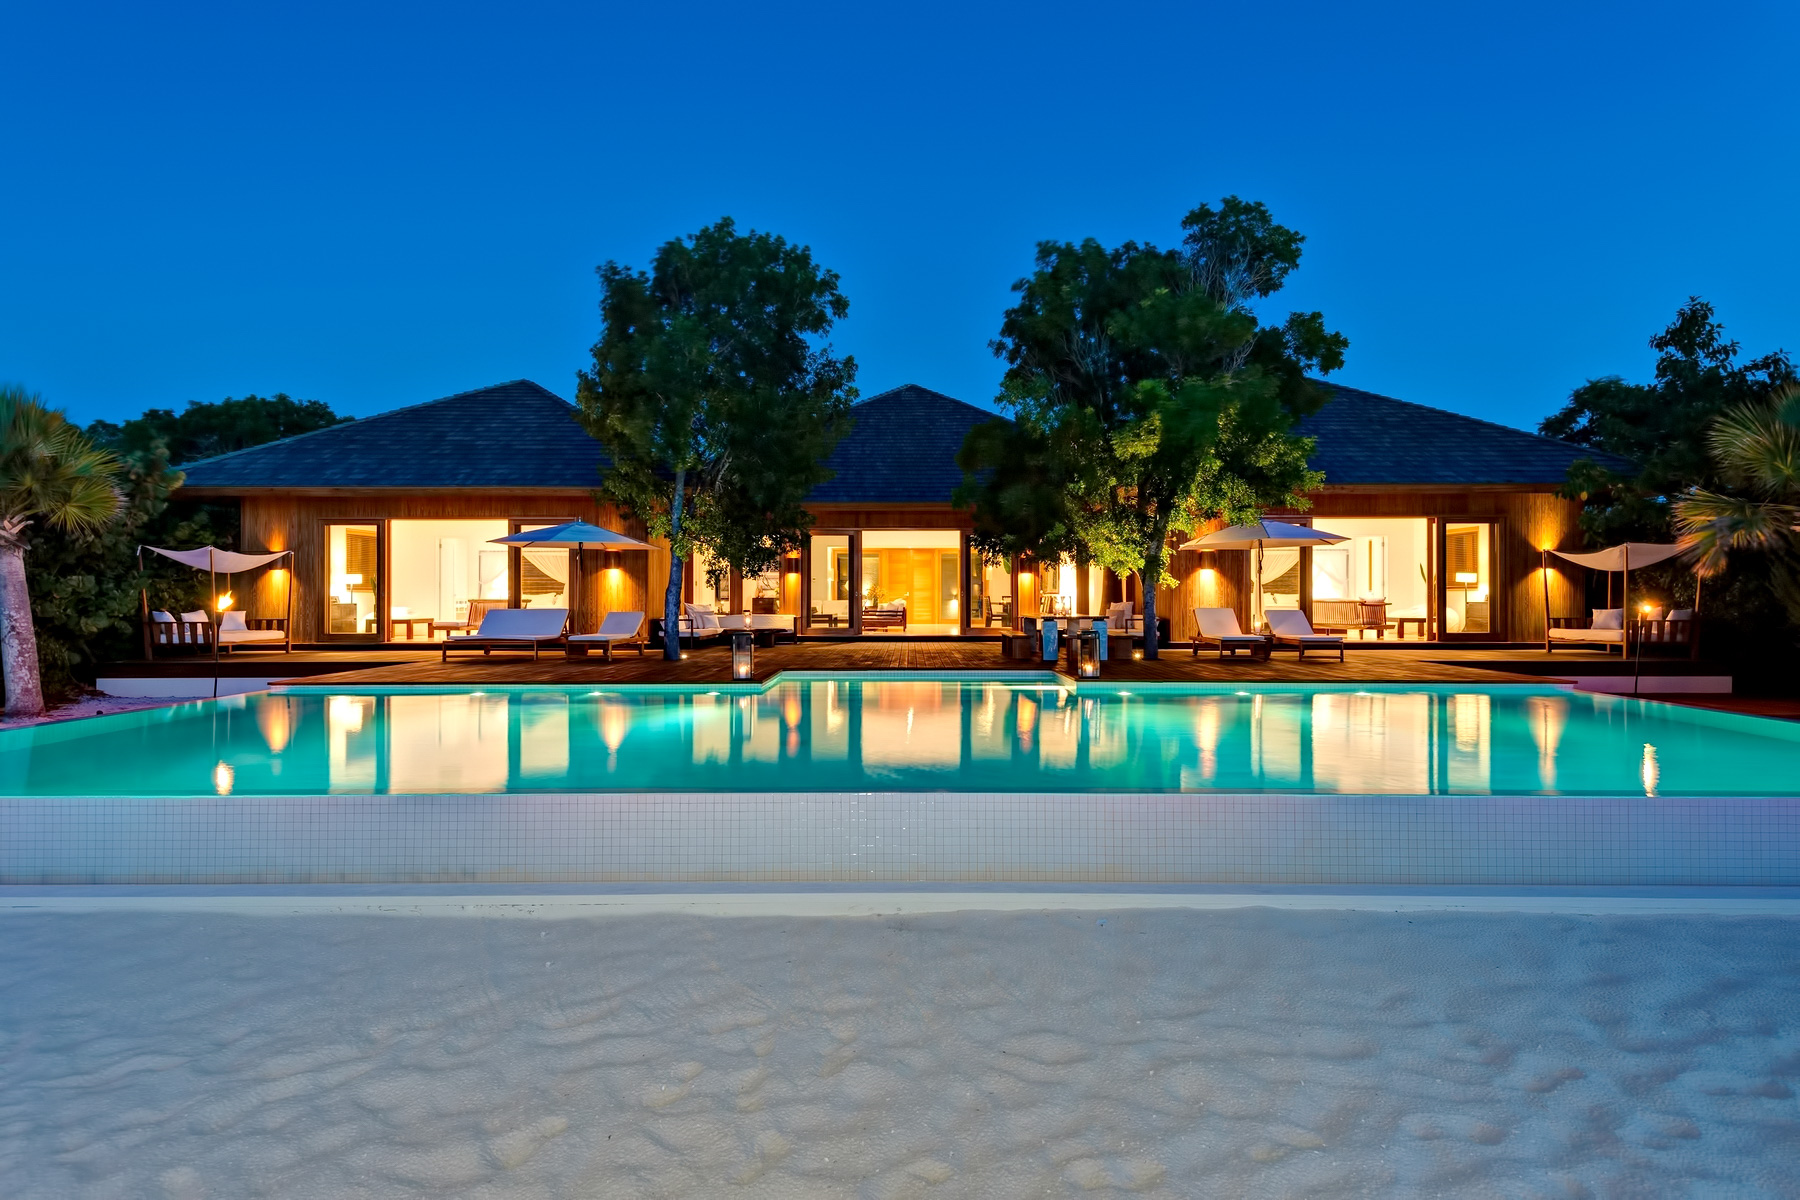 Luxury Island Villa 1101 - Parrot Cay, Turks and Caicos Islands